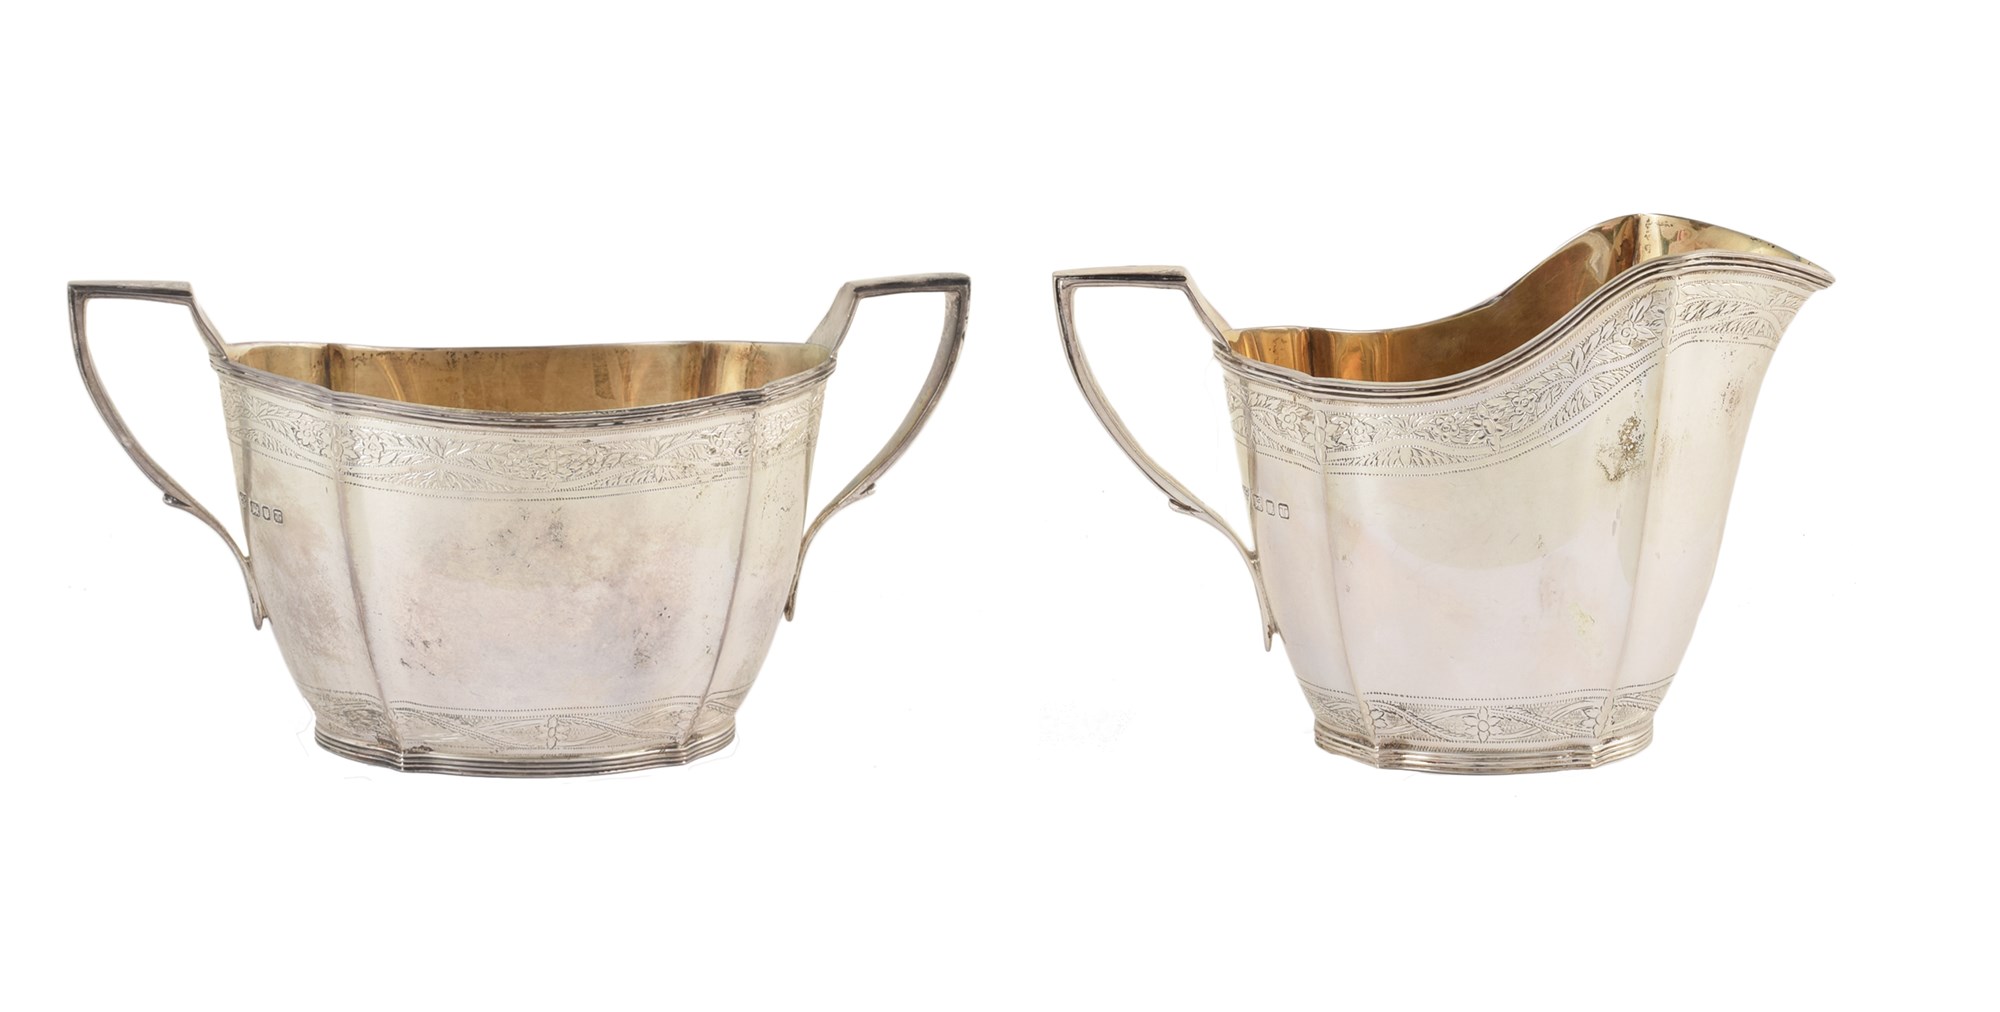 Four-piece silver tea set by Garrard & Co , comprising teapot, hot water jug, sugar bowl and milk